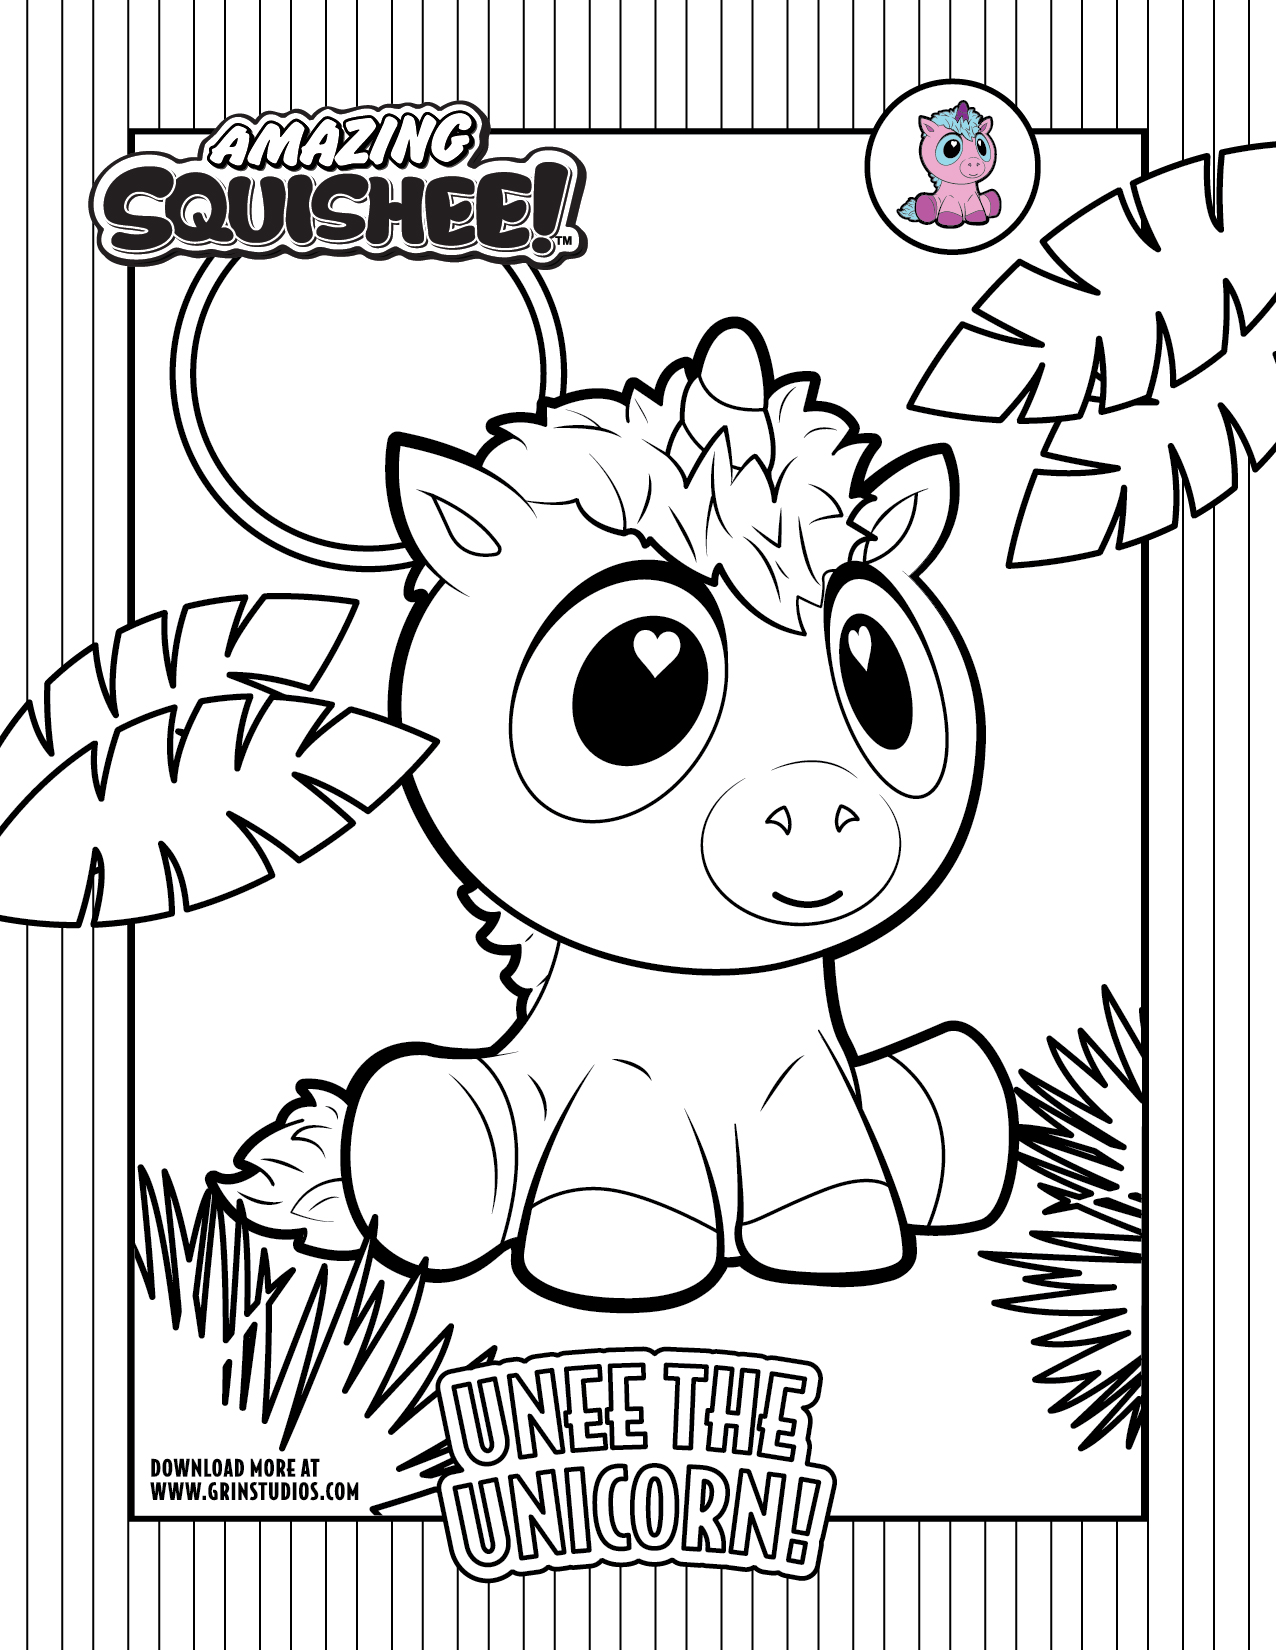 Unee the Unicorn Amazing Squishee!